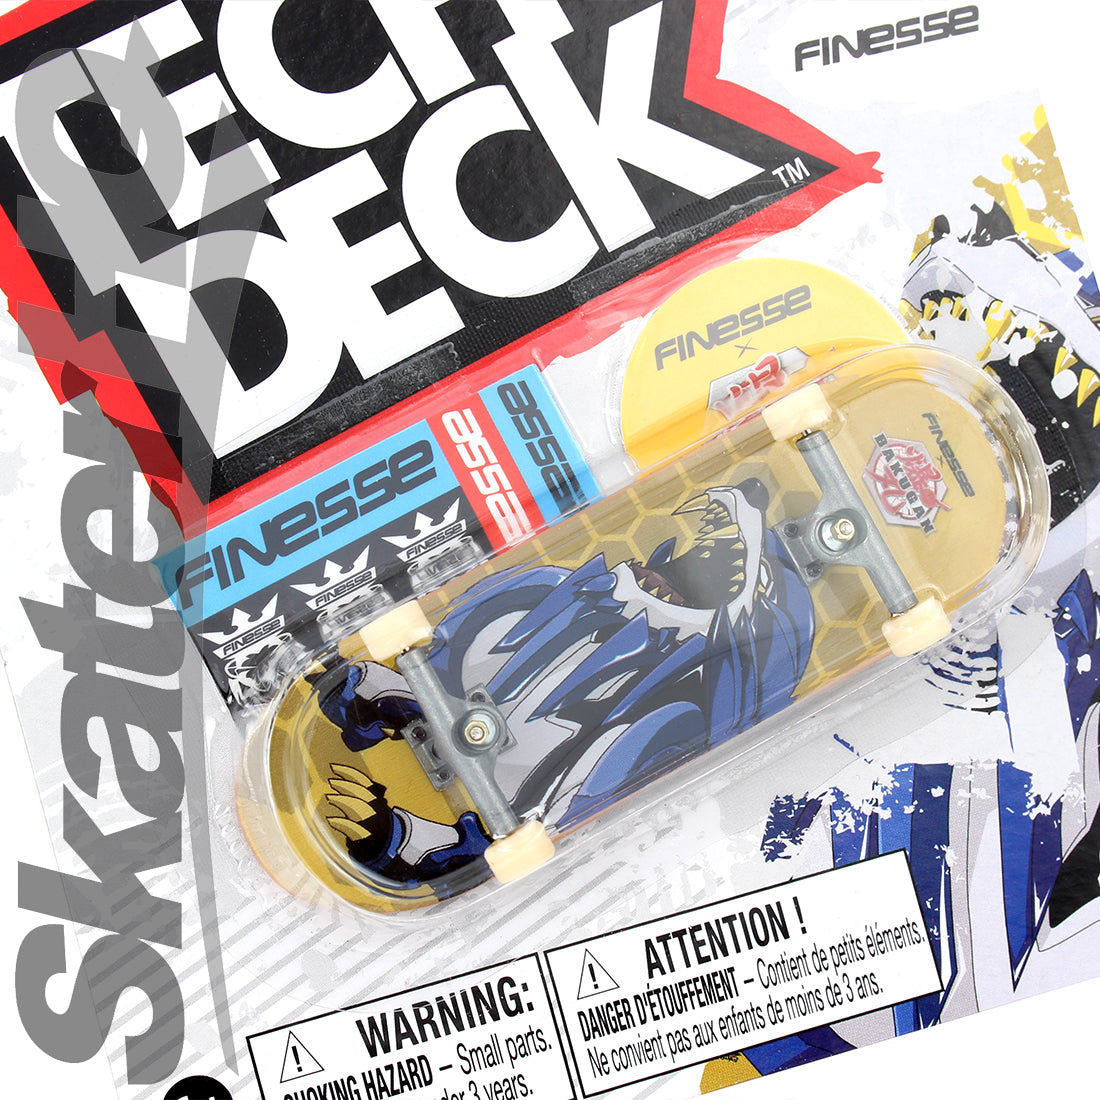 Tech Deck 2022 Series - Finesse - Bakugan Hydorous Skateboard Accessories